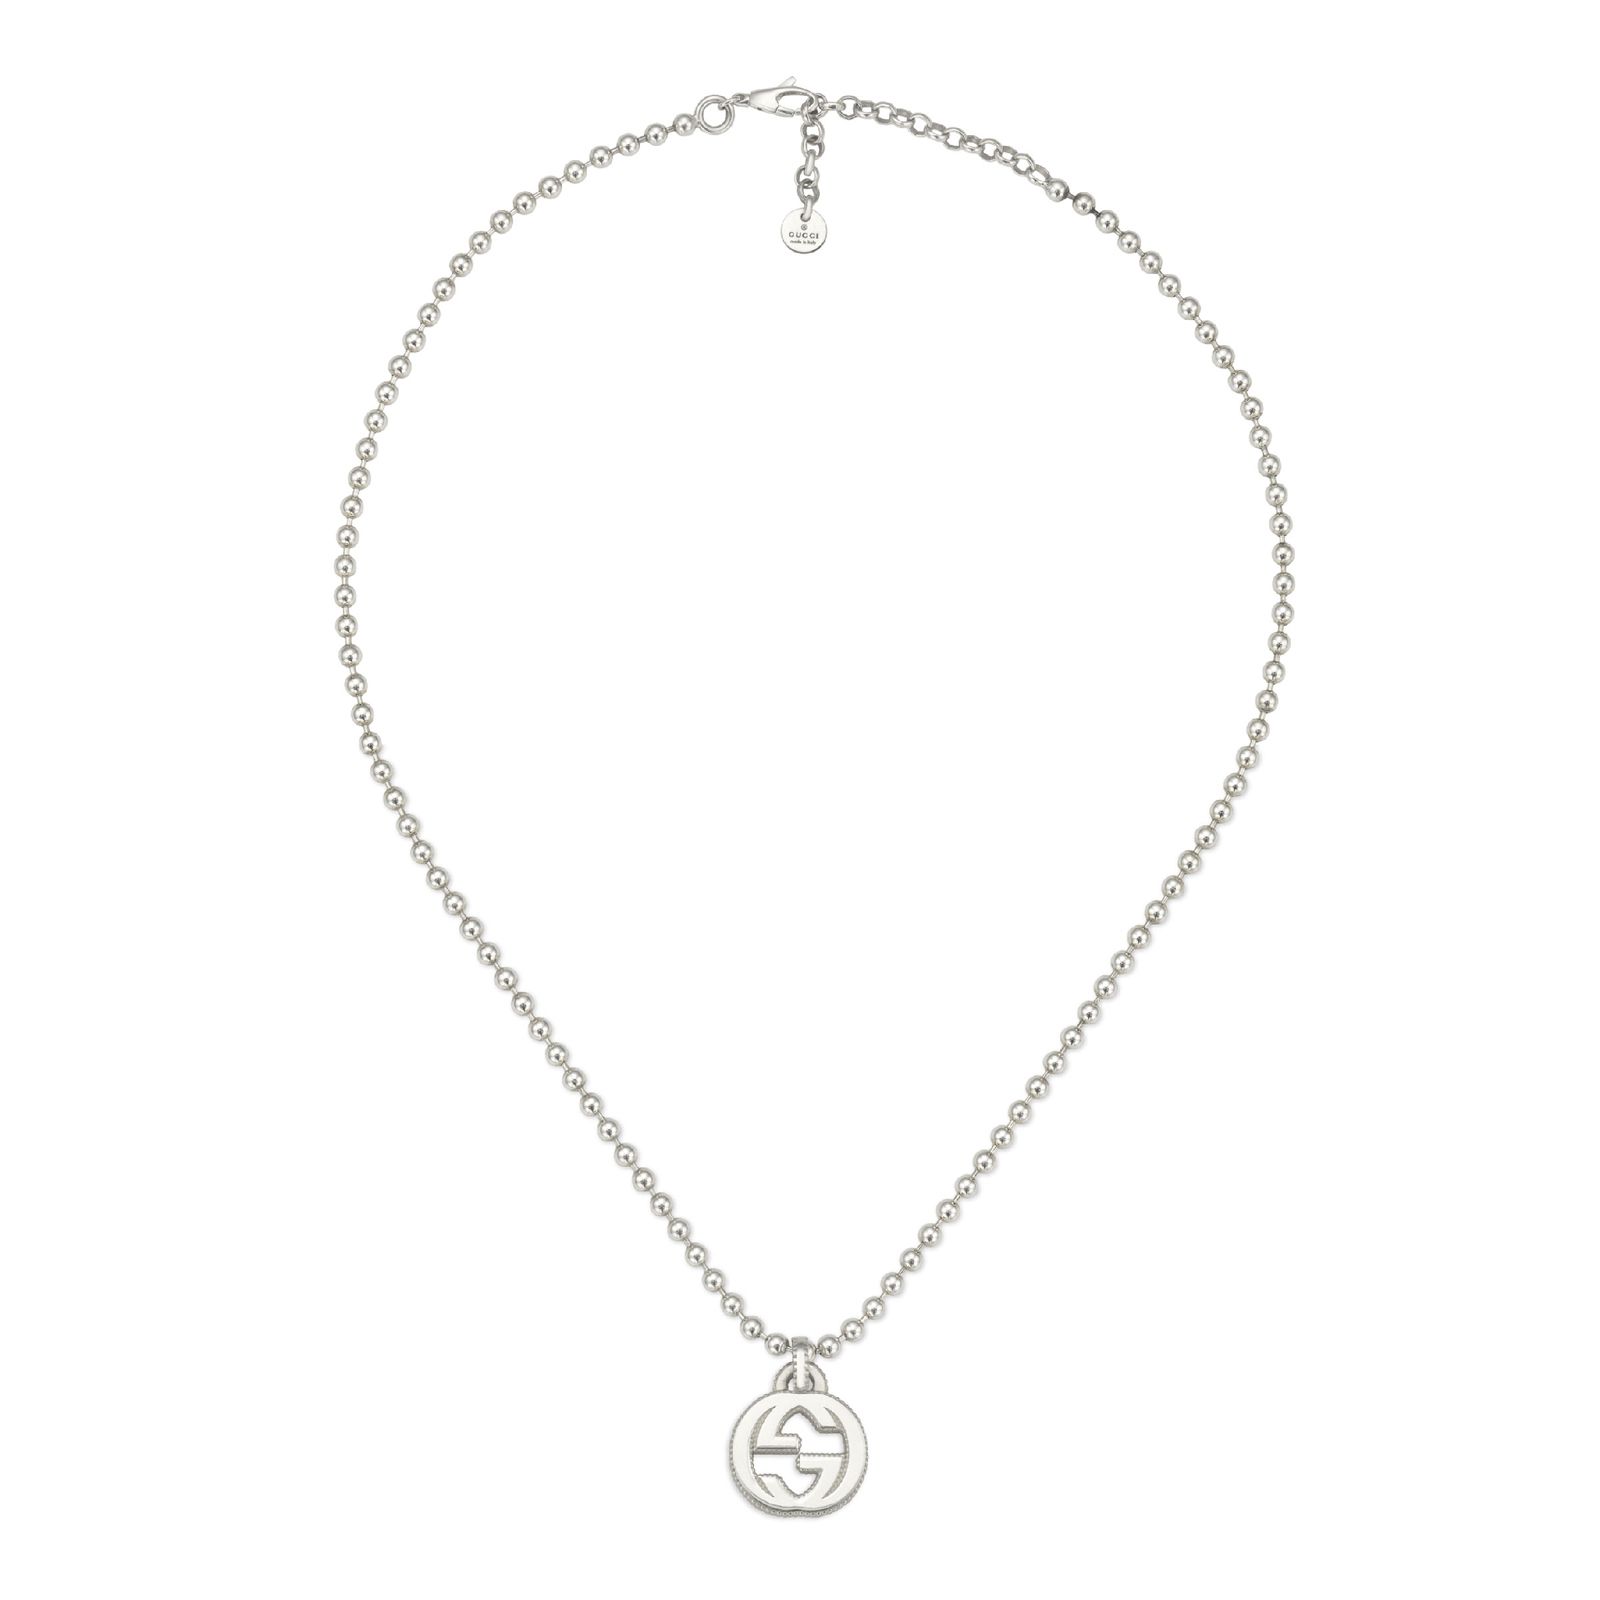 Gucci Interlocking G Necklace in Silver 